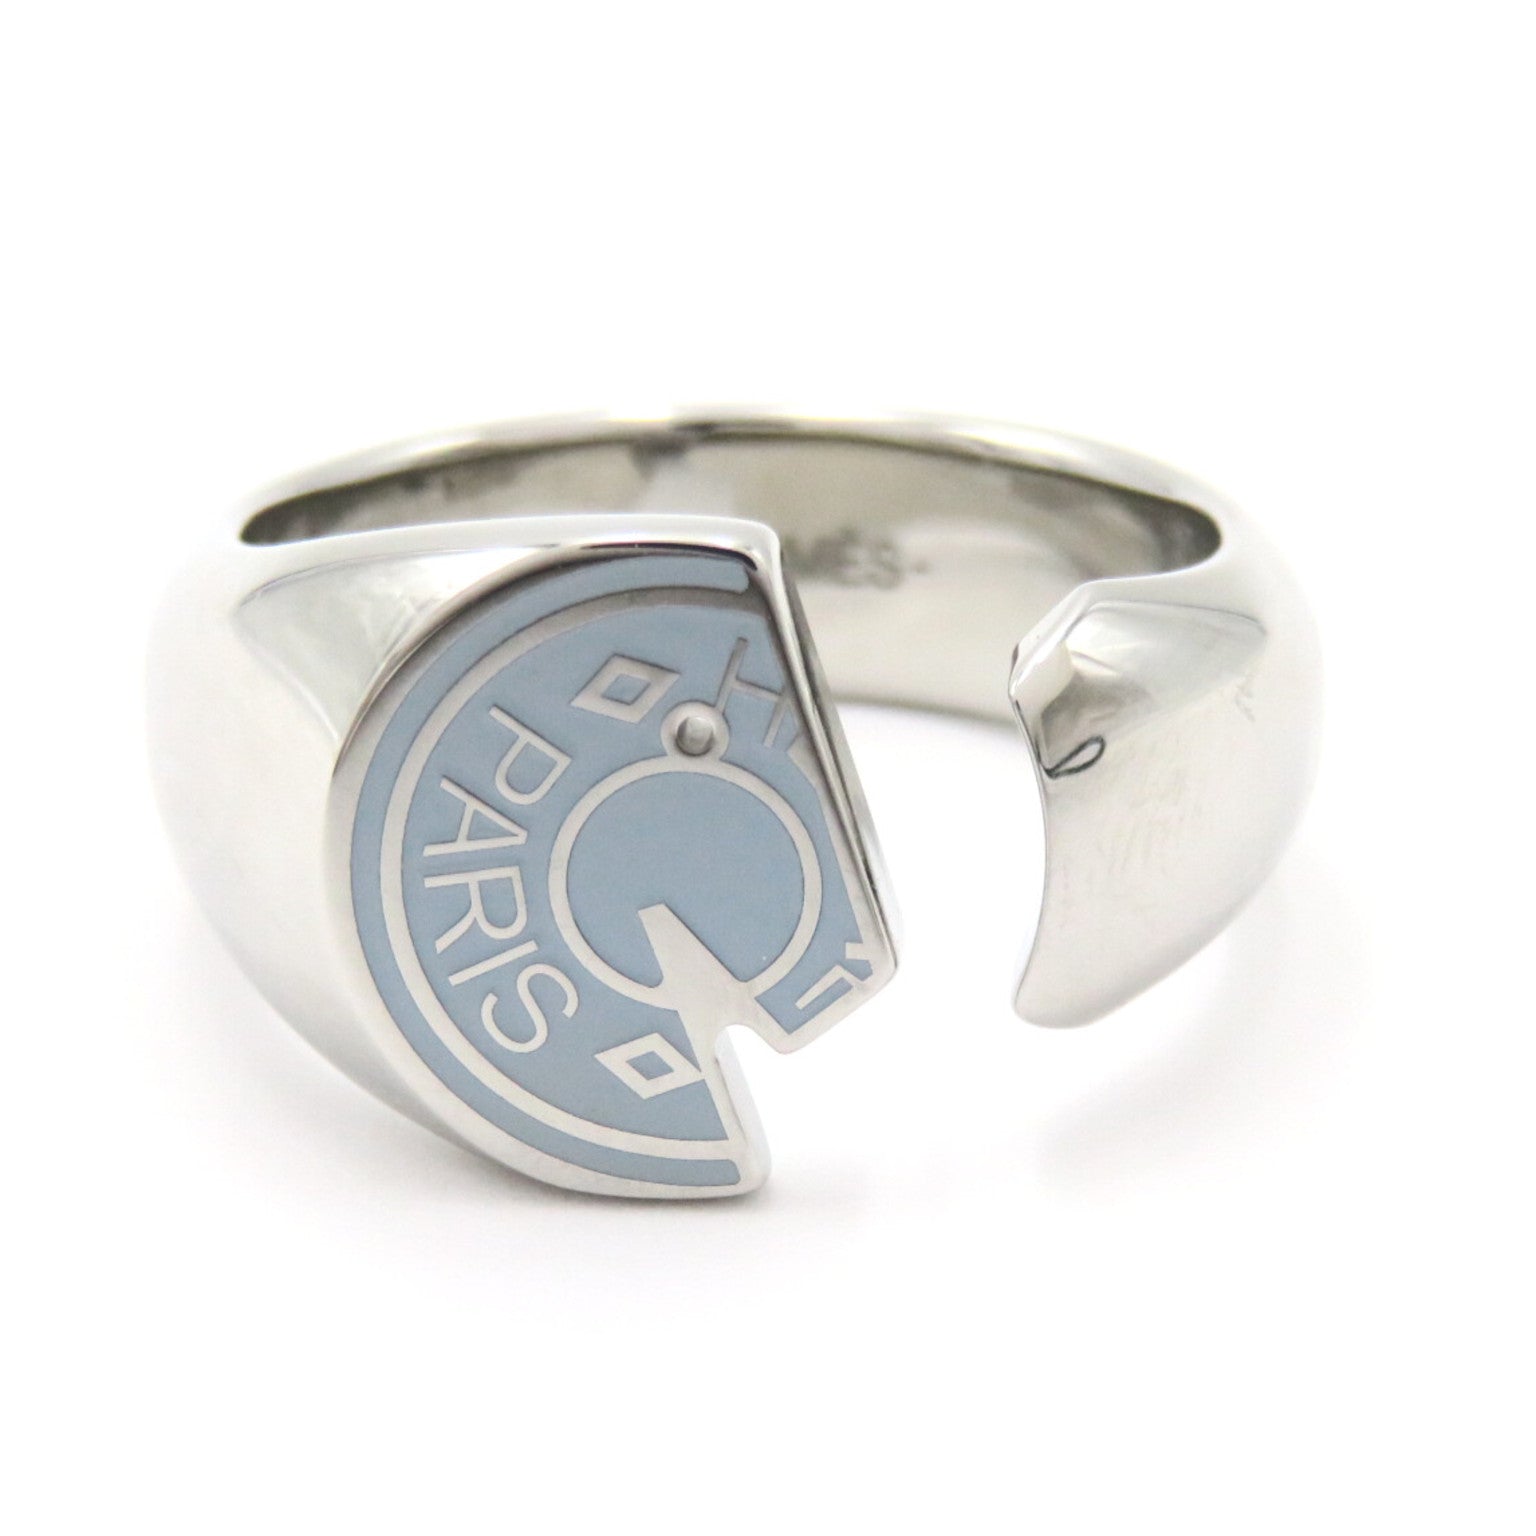 Hermes Hermes Rings Carousel Rings Jewelry Stainless Steel   Blue/Silver H077326FJ0564